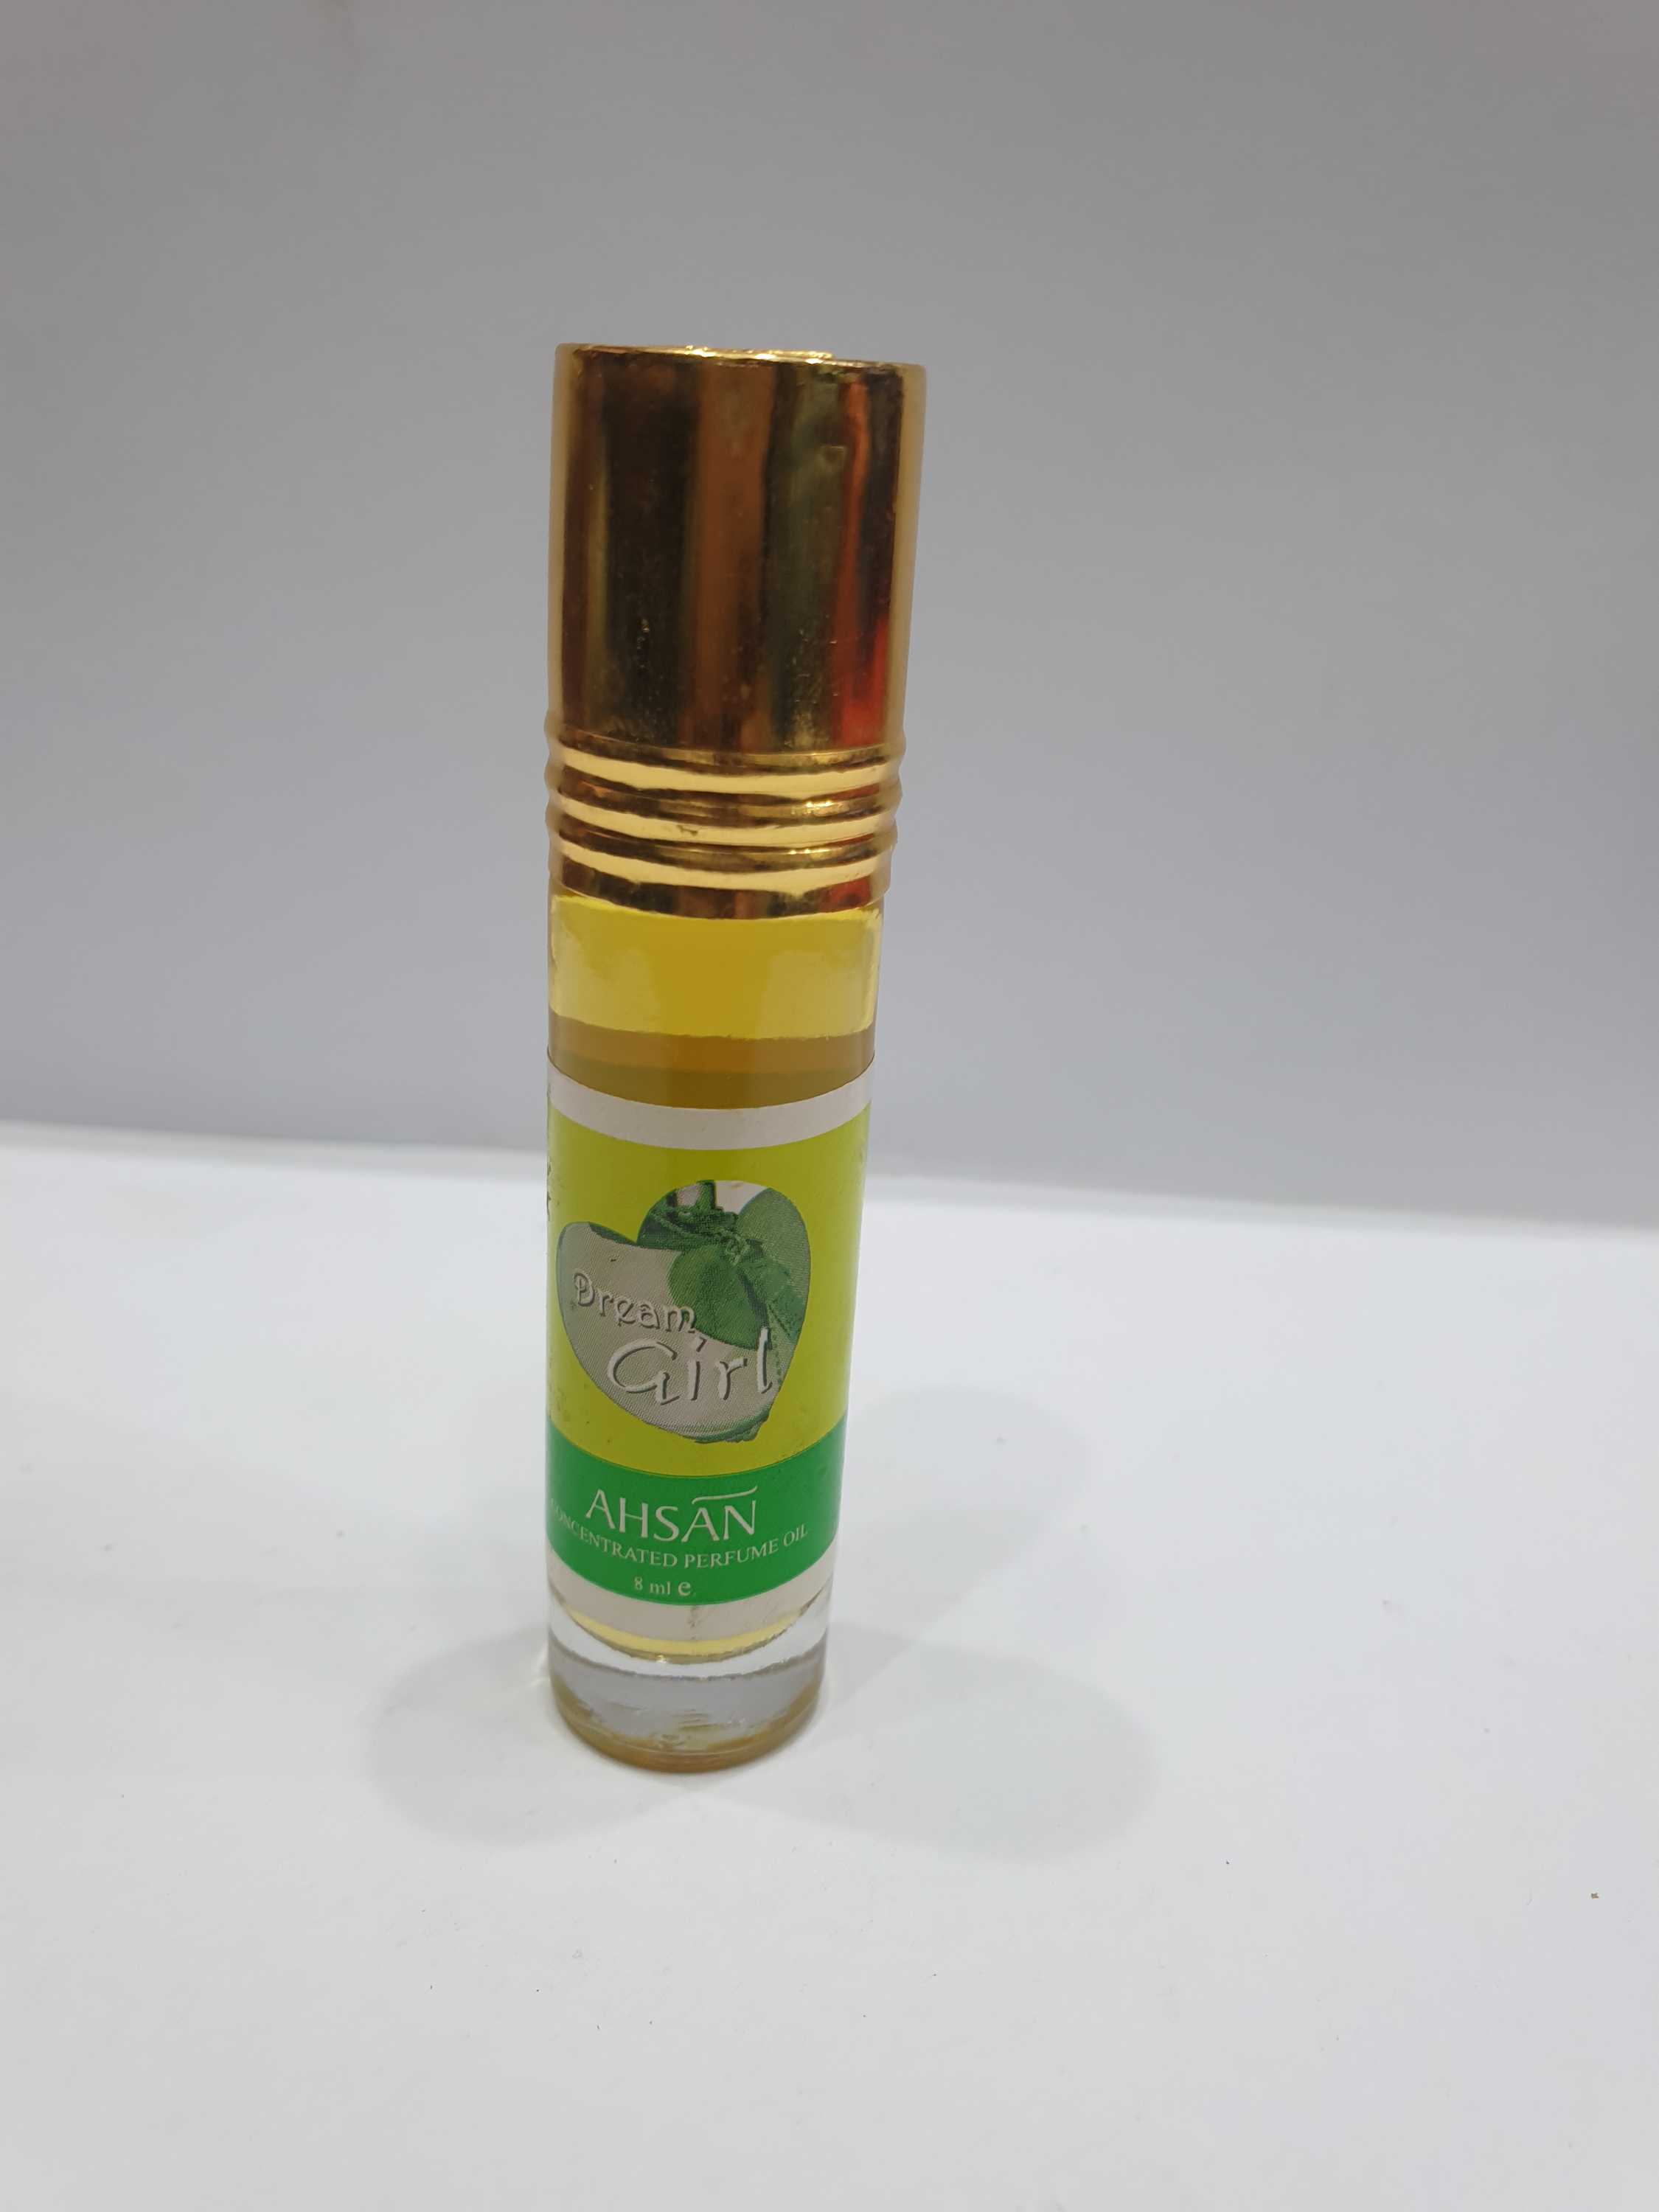 Attar - Handmade Natural Perfume Form Herbal Extract, dream Girl, 6ml, roll On